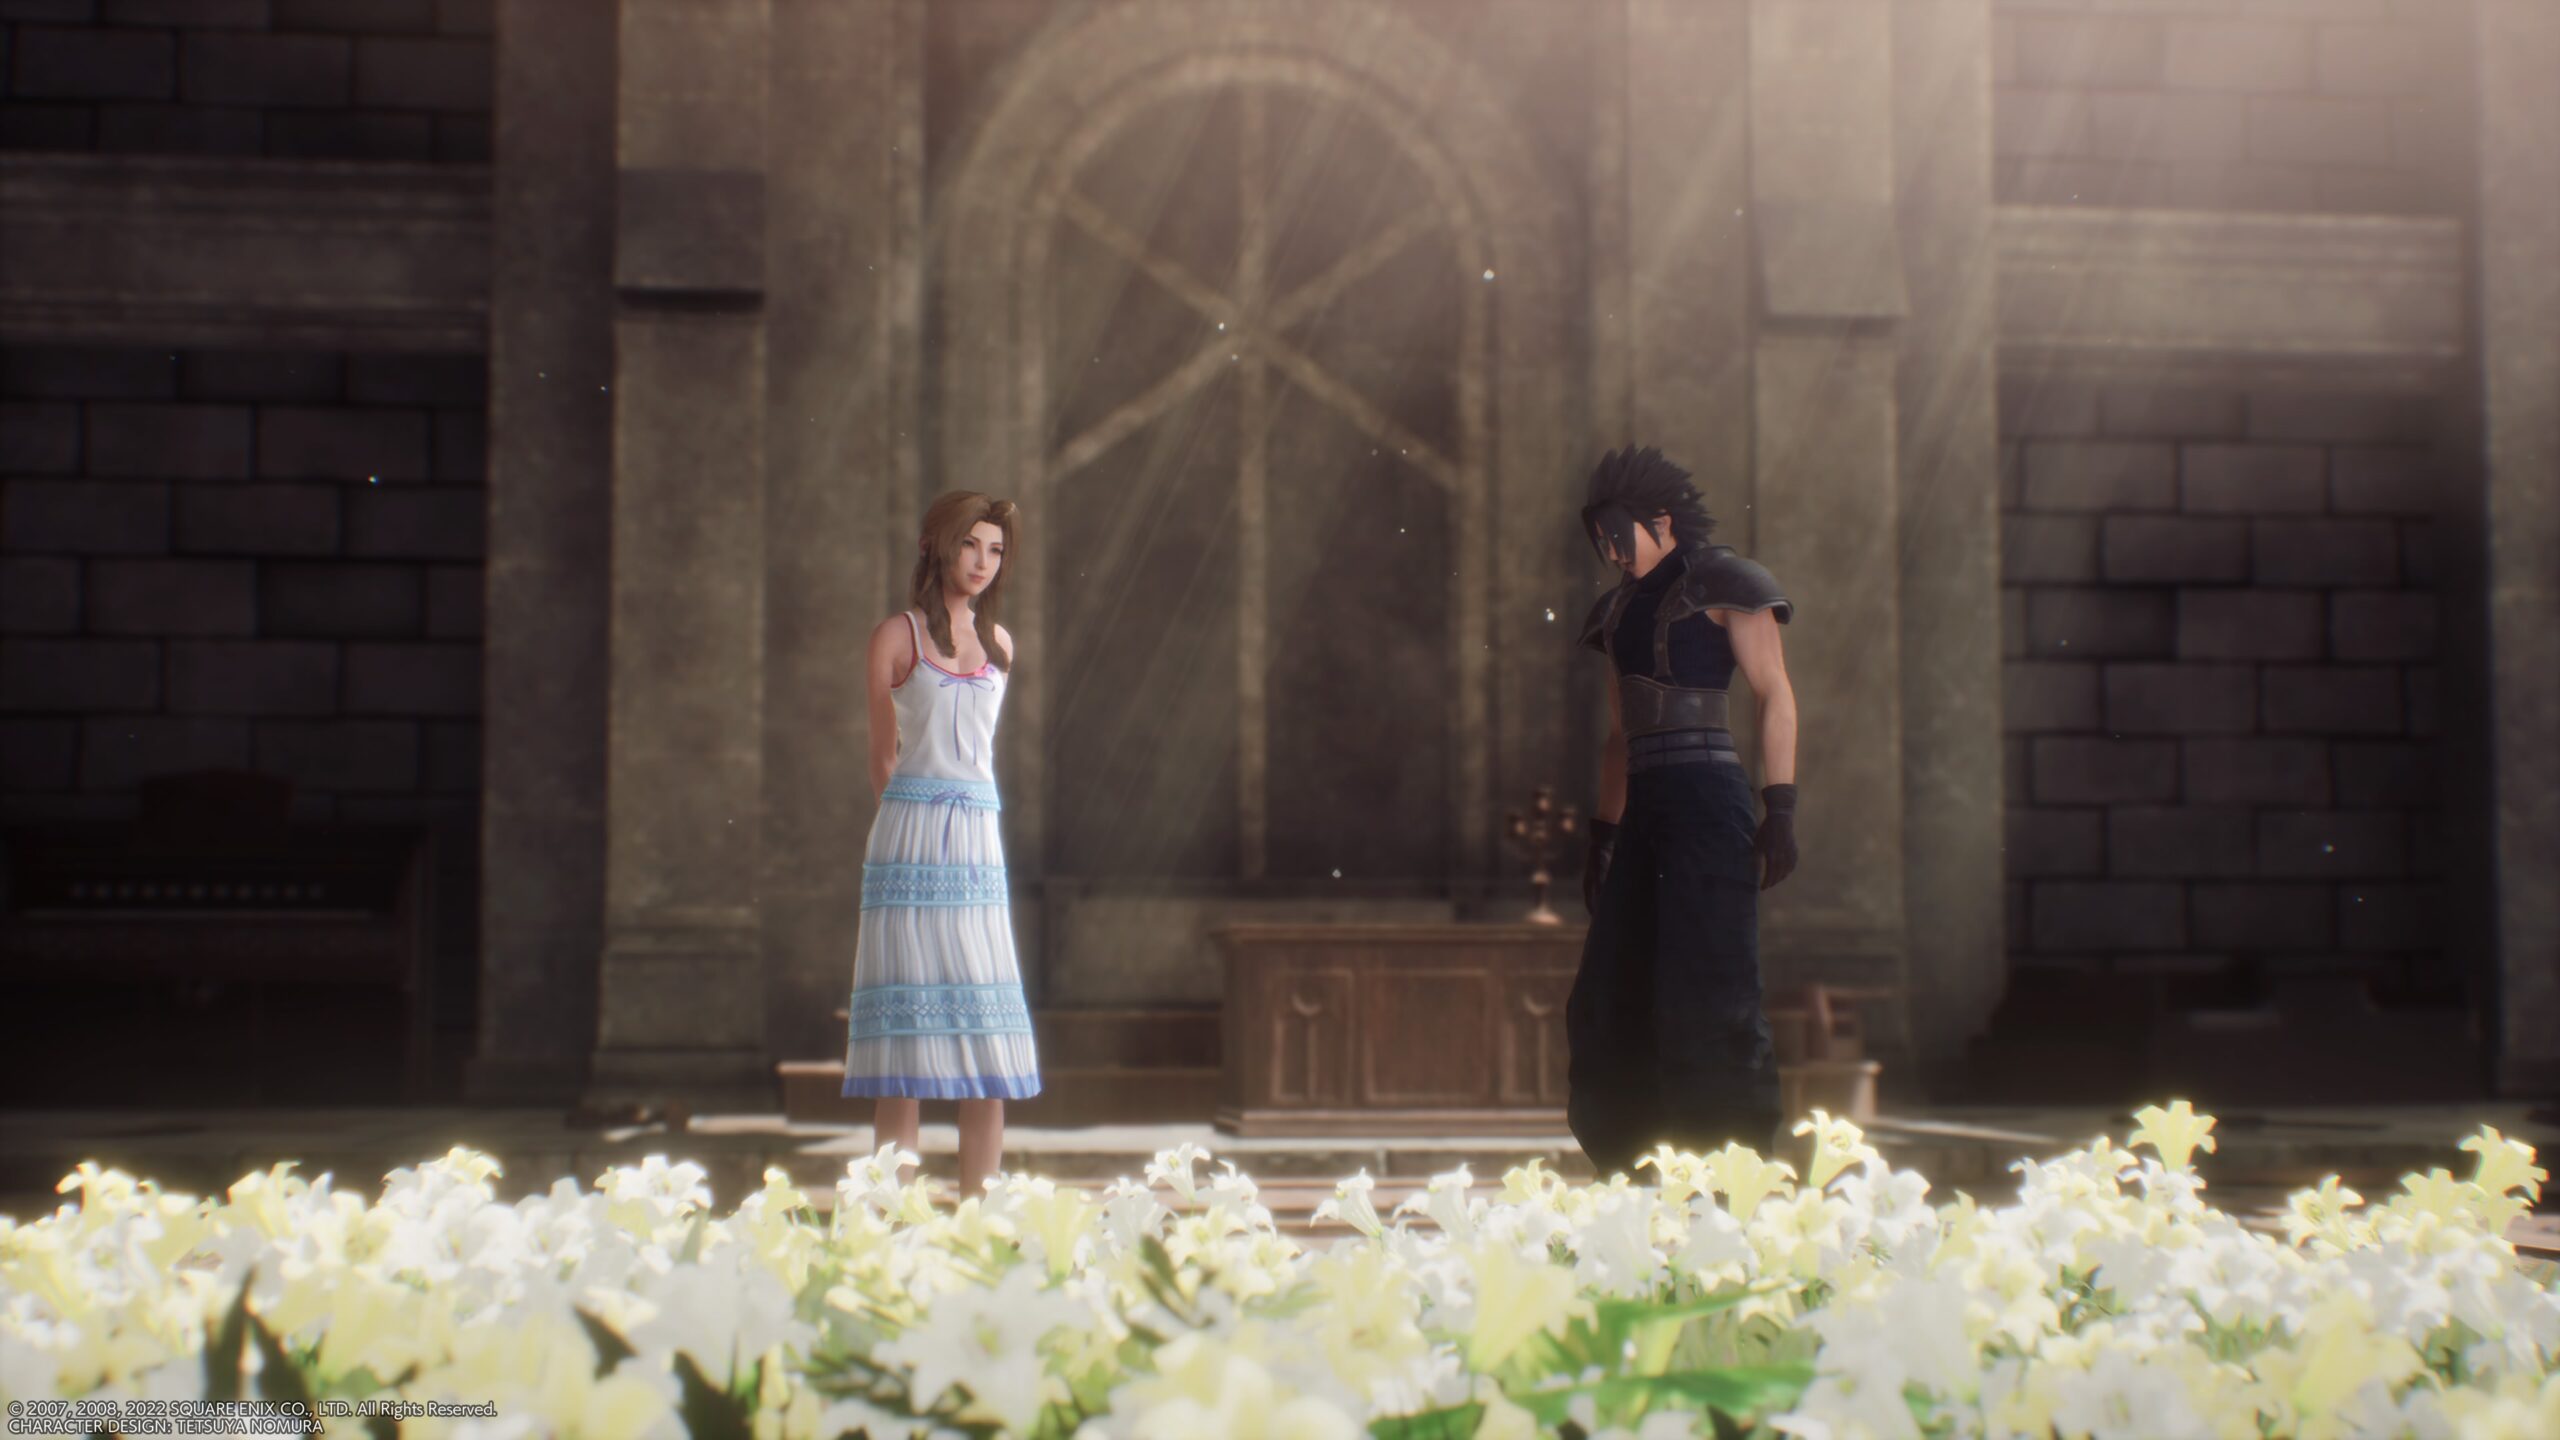 Final Fantasy VII: Crisis Core Reunion Midgar Full of Flowers